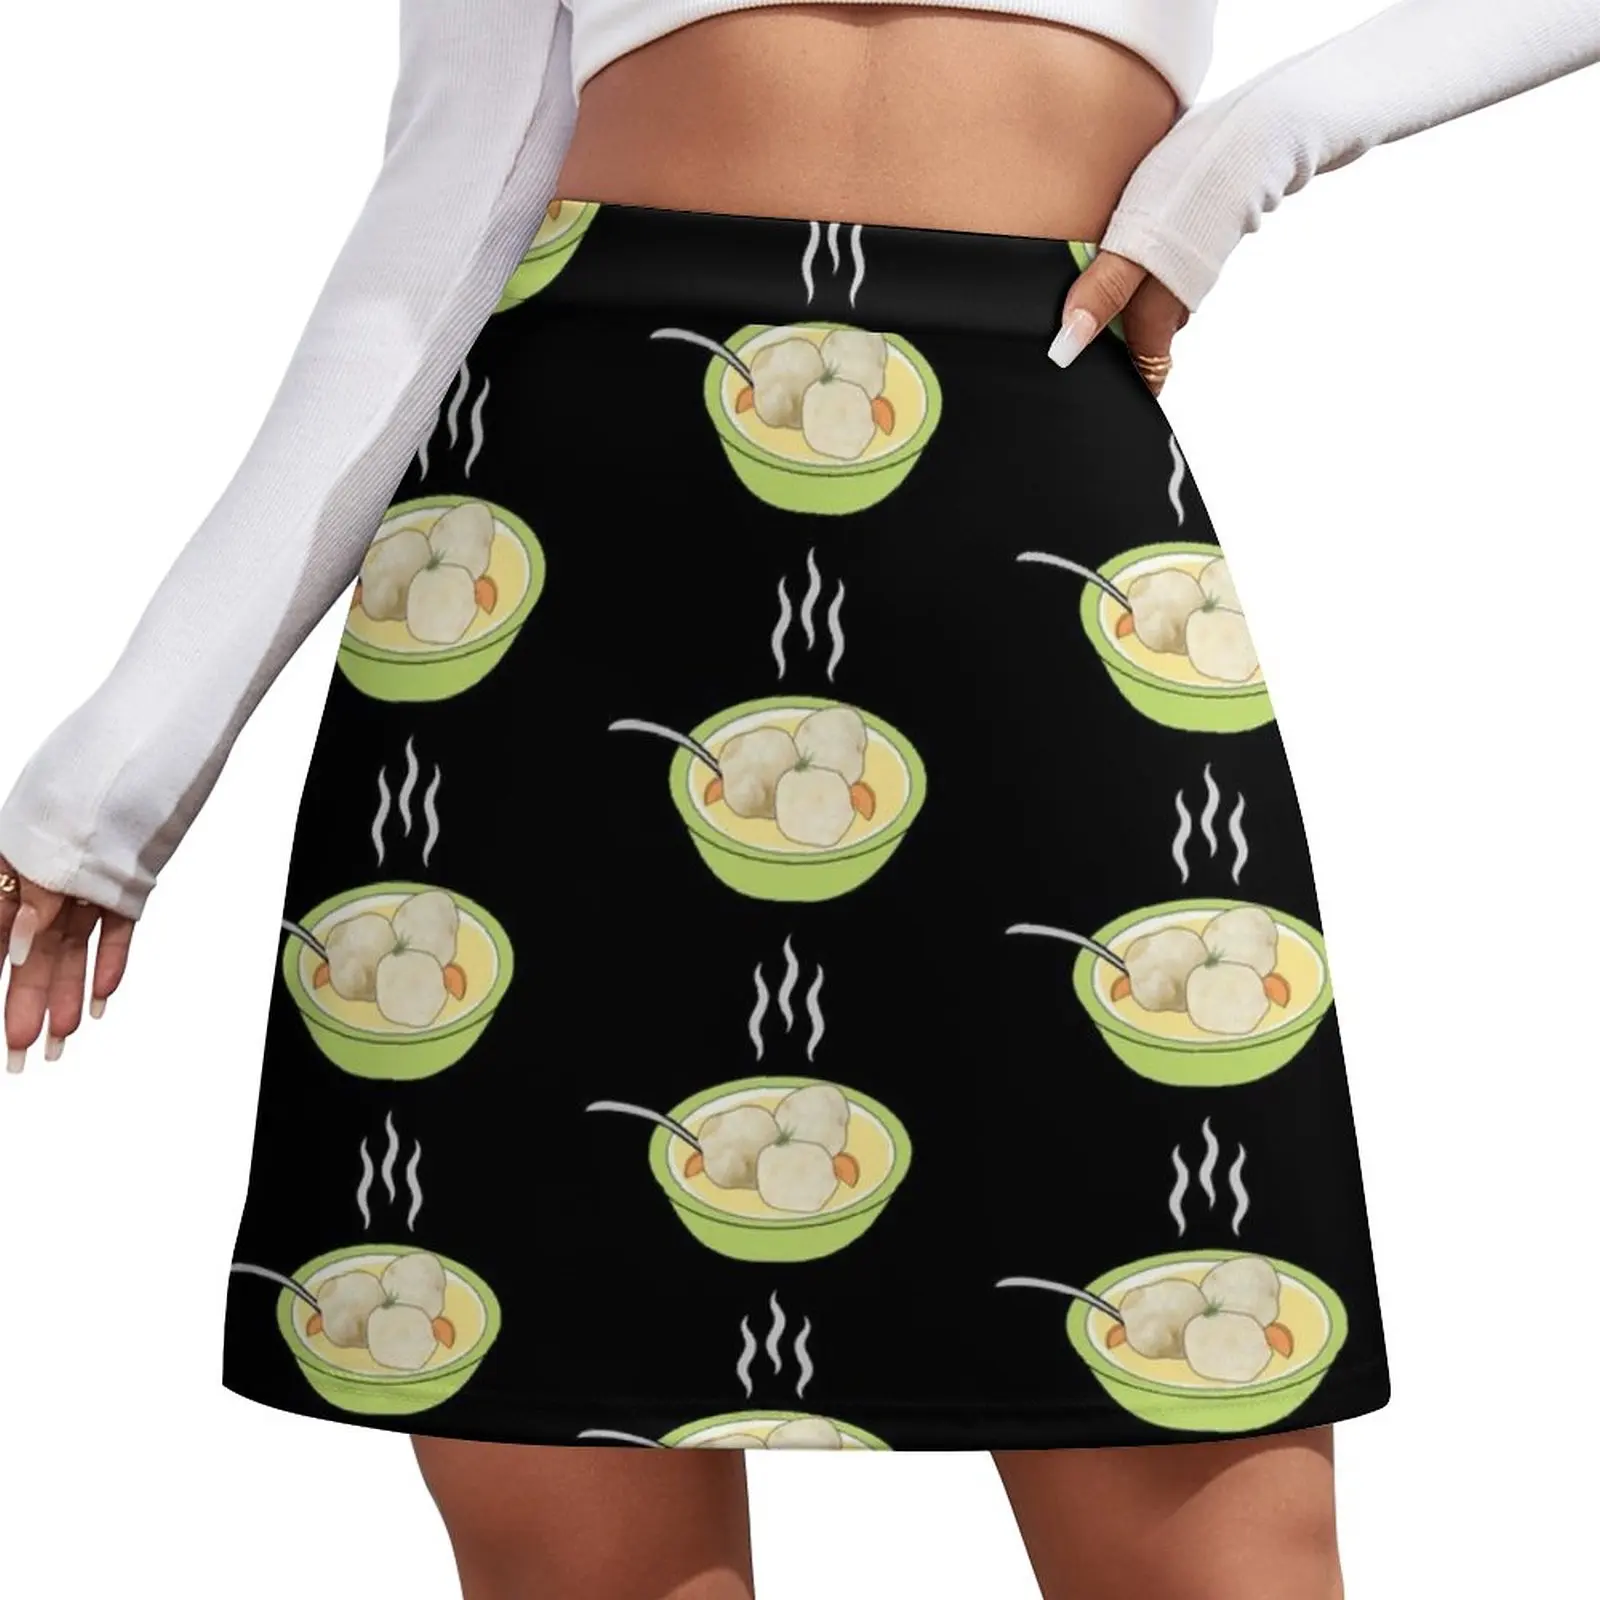 Matzo Ball Soup Jewish Food Mini Skirt Women's skirt skirt for women Skirt shorts